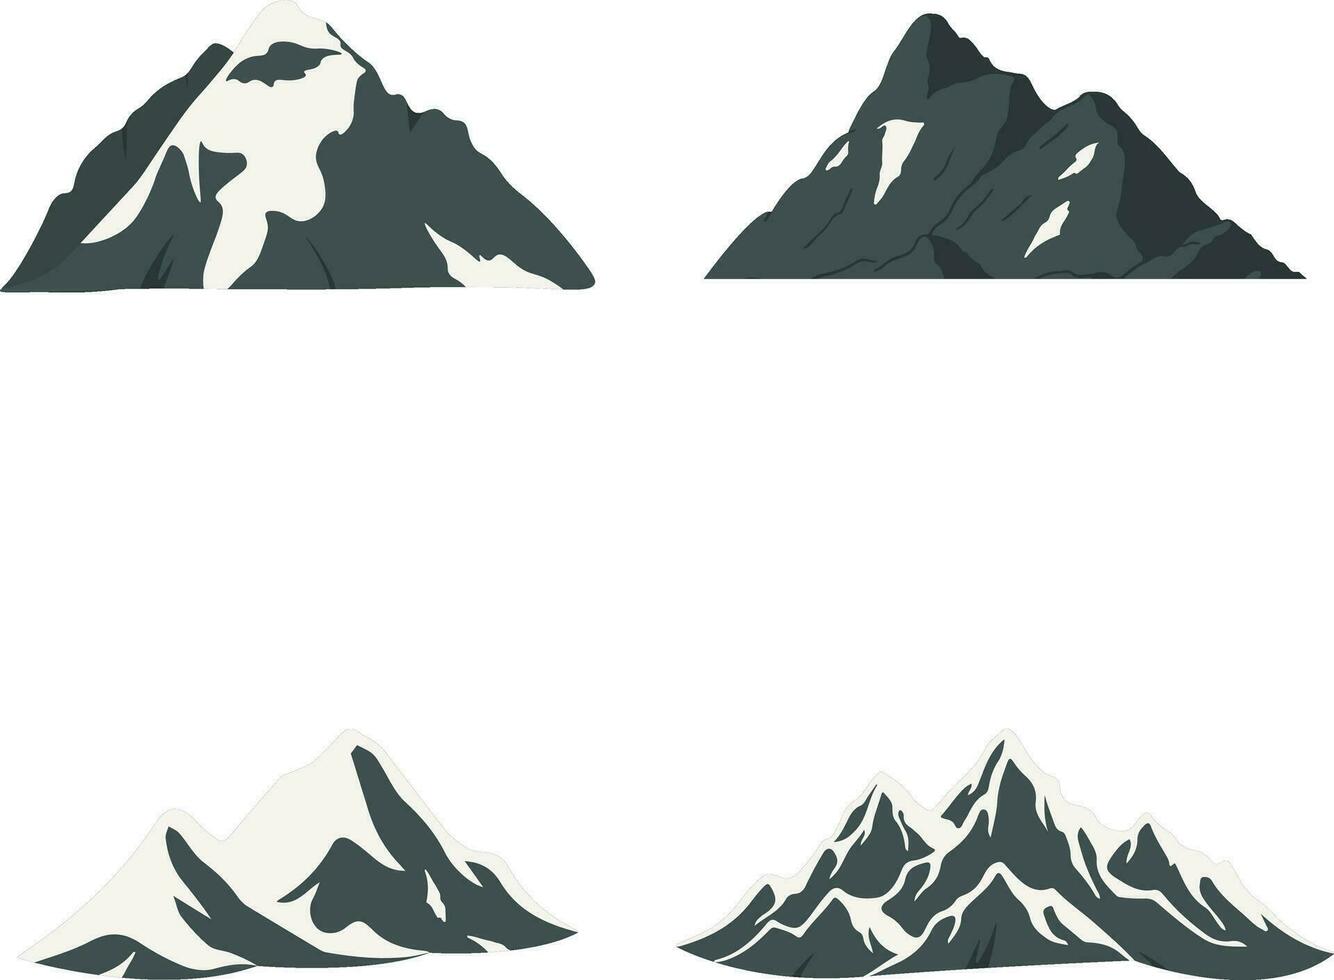 colección de internacional montaña día. en diciembre 11 aislado en blanco antecedentes. vector ilustración.